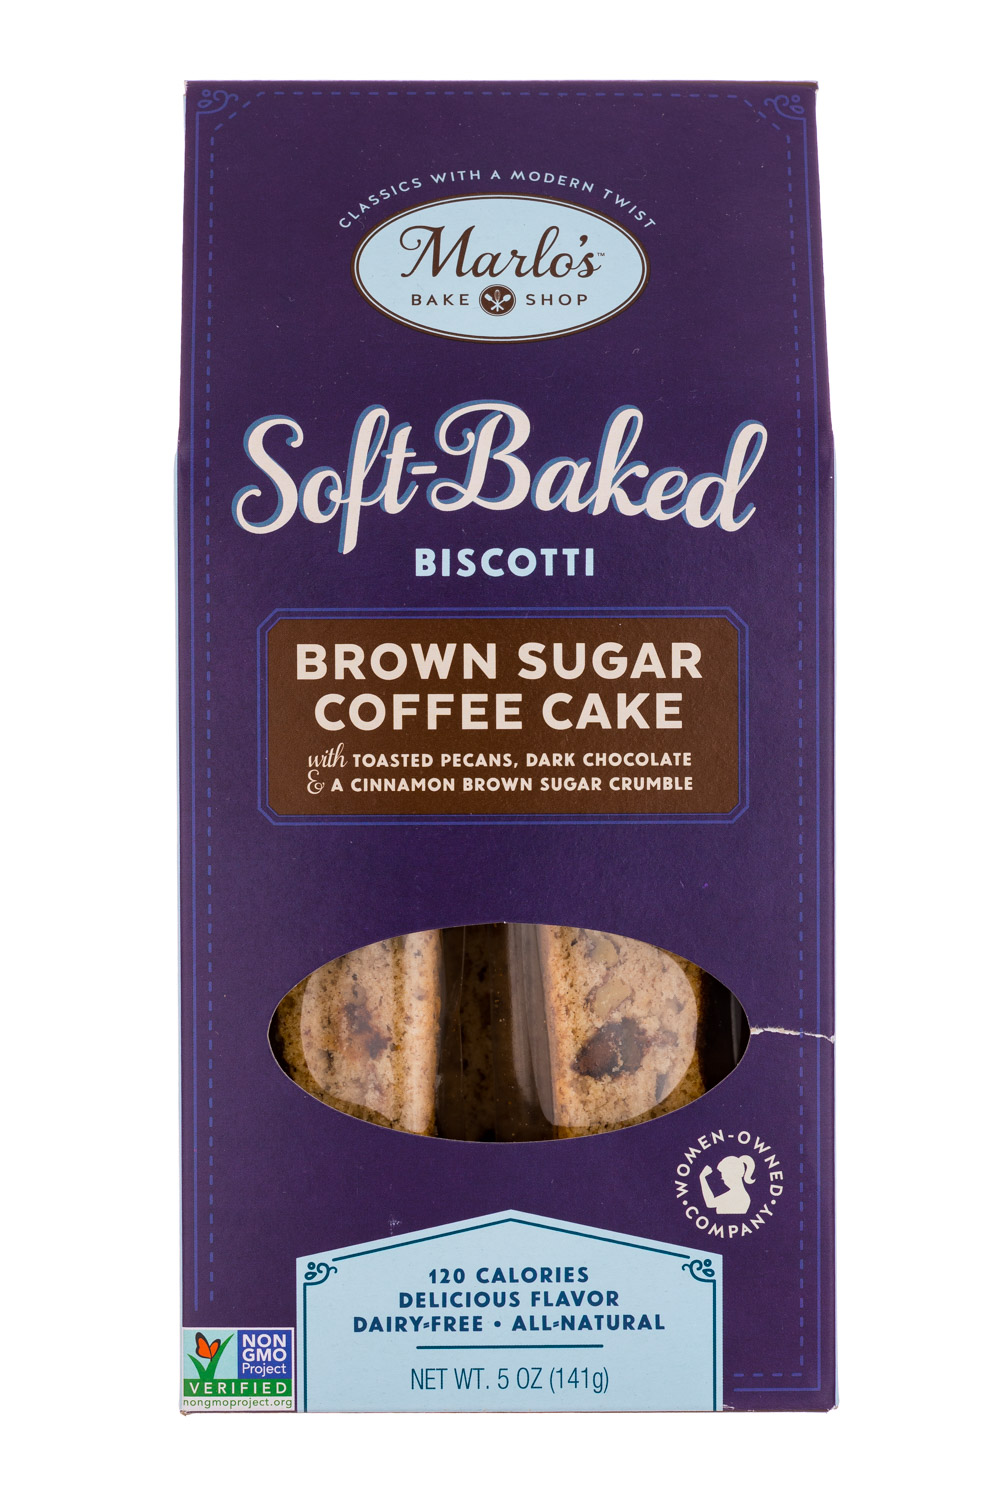 Brown Sugar Coffee Cake